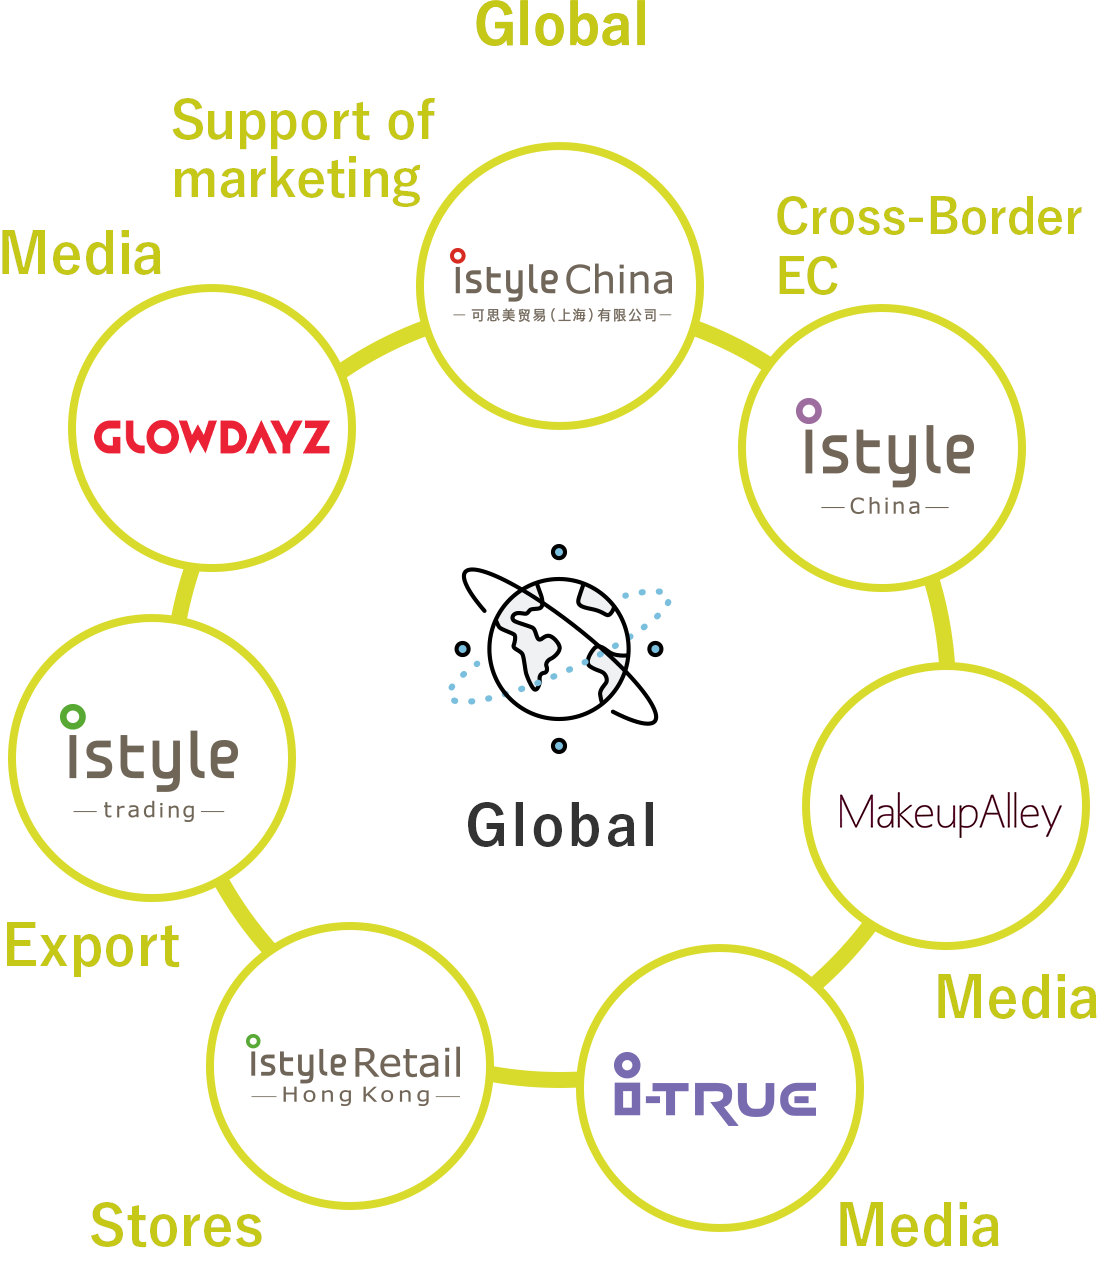 Global Overseas (marketing support, shops, cross-border EC, media, export)